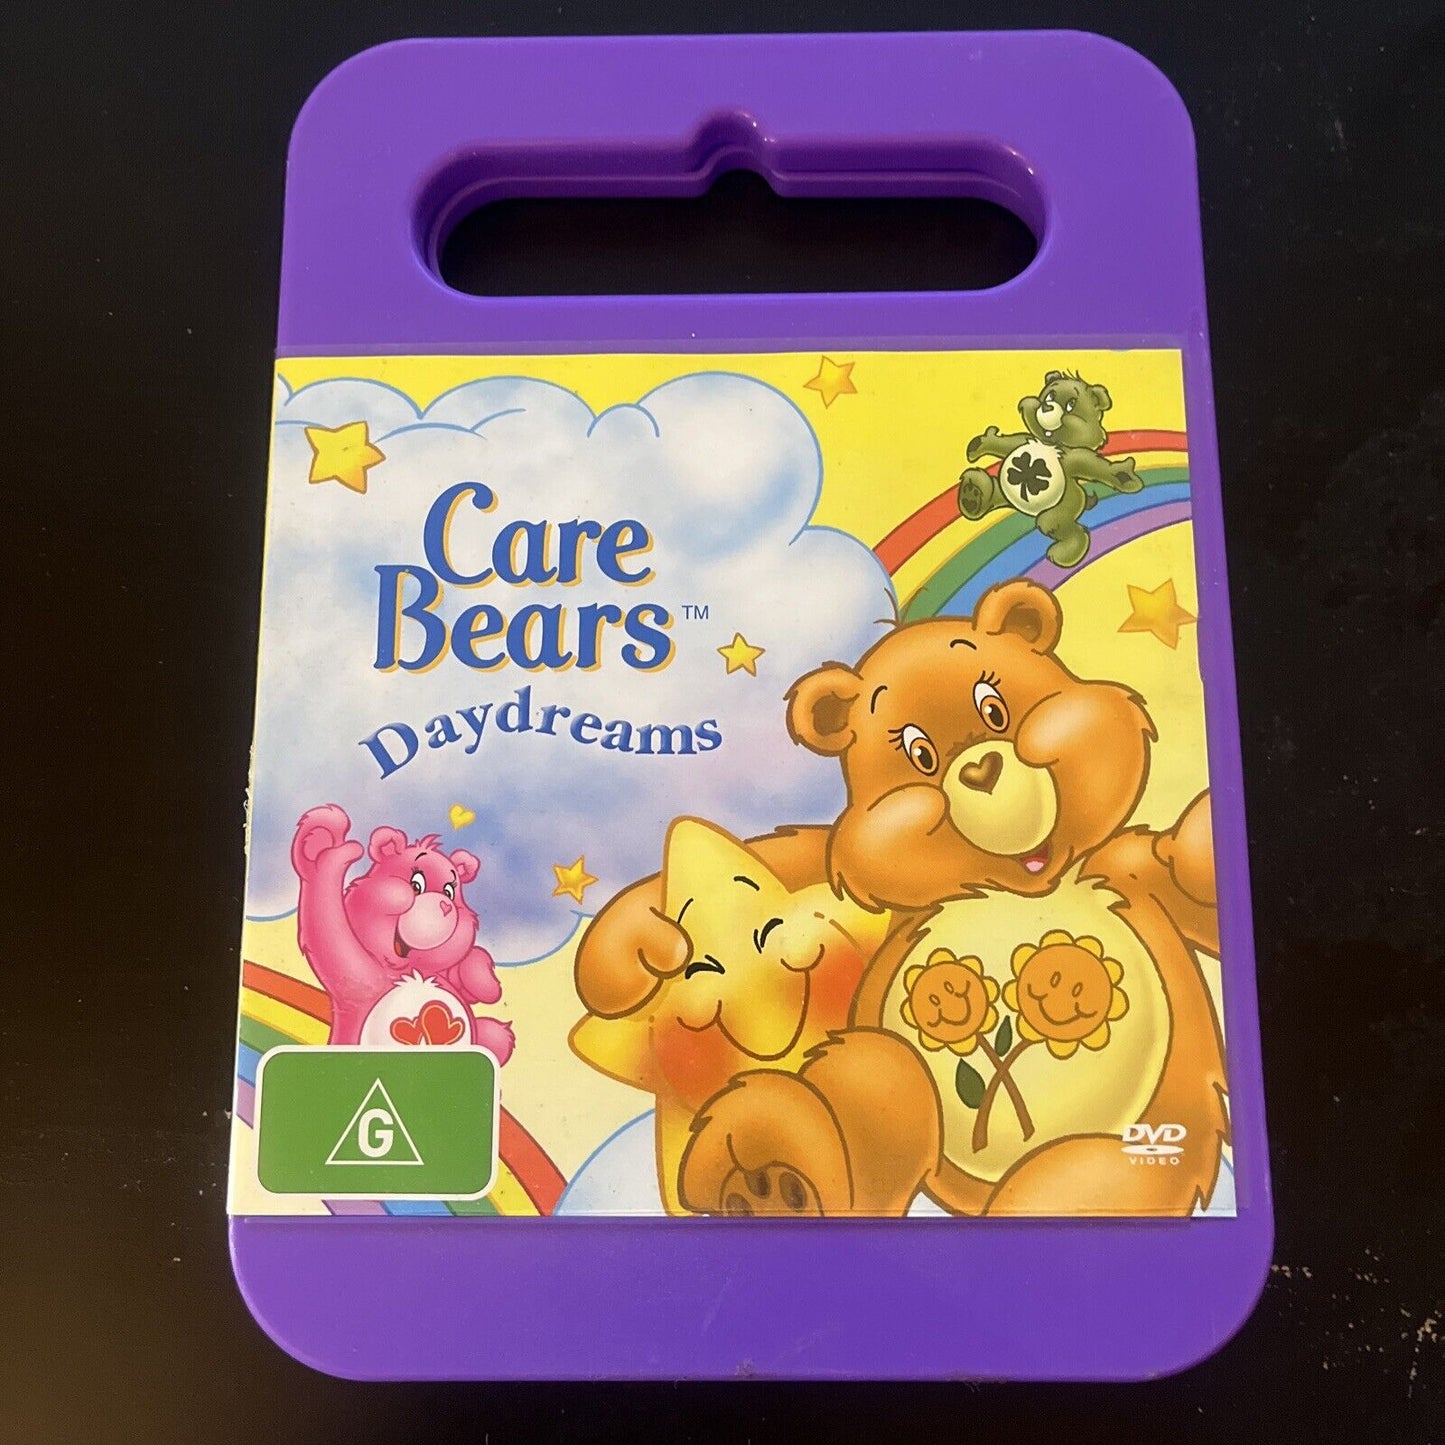 Care Bears - Daydreams (DVD) Region 4